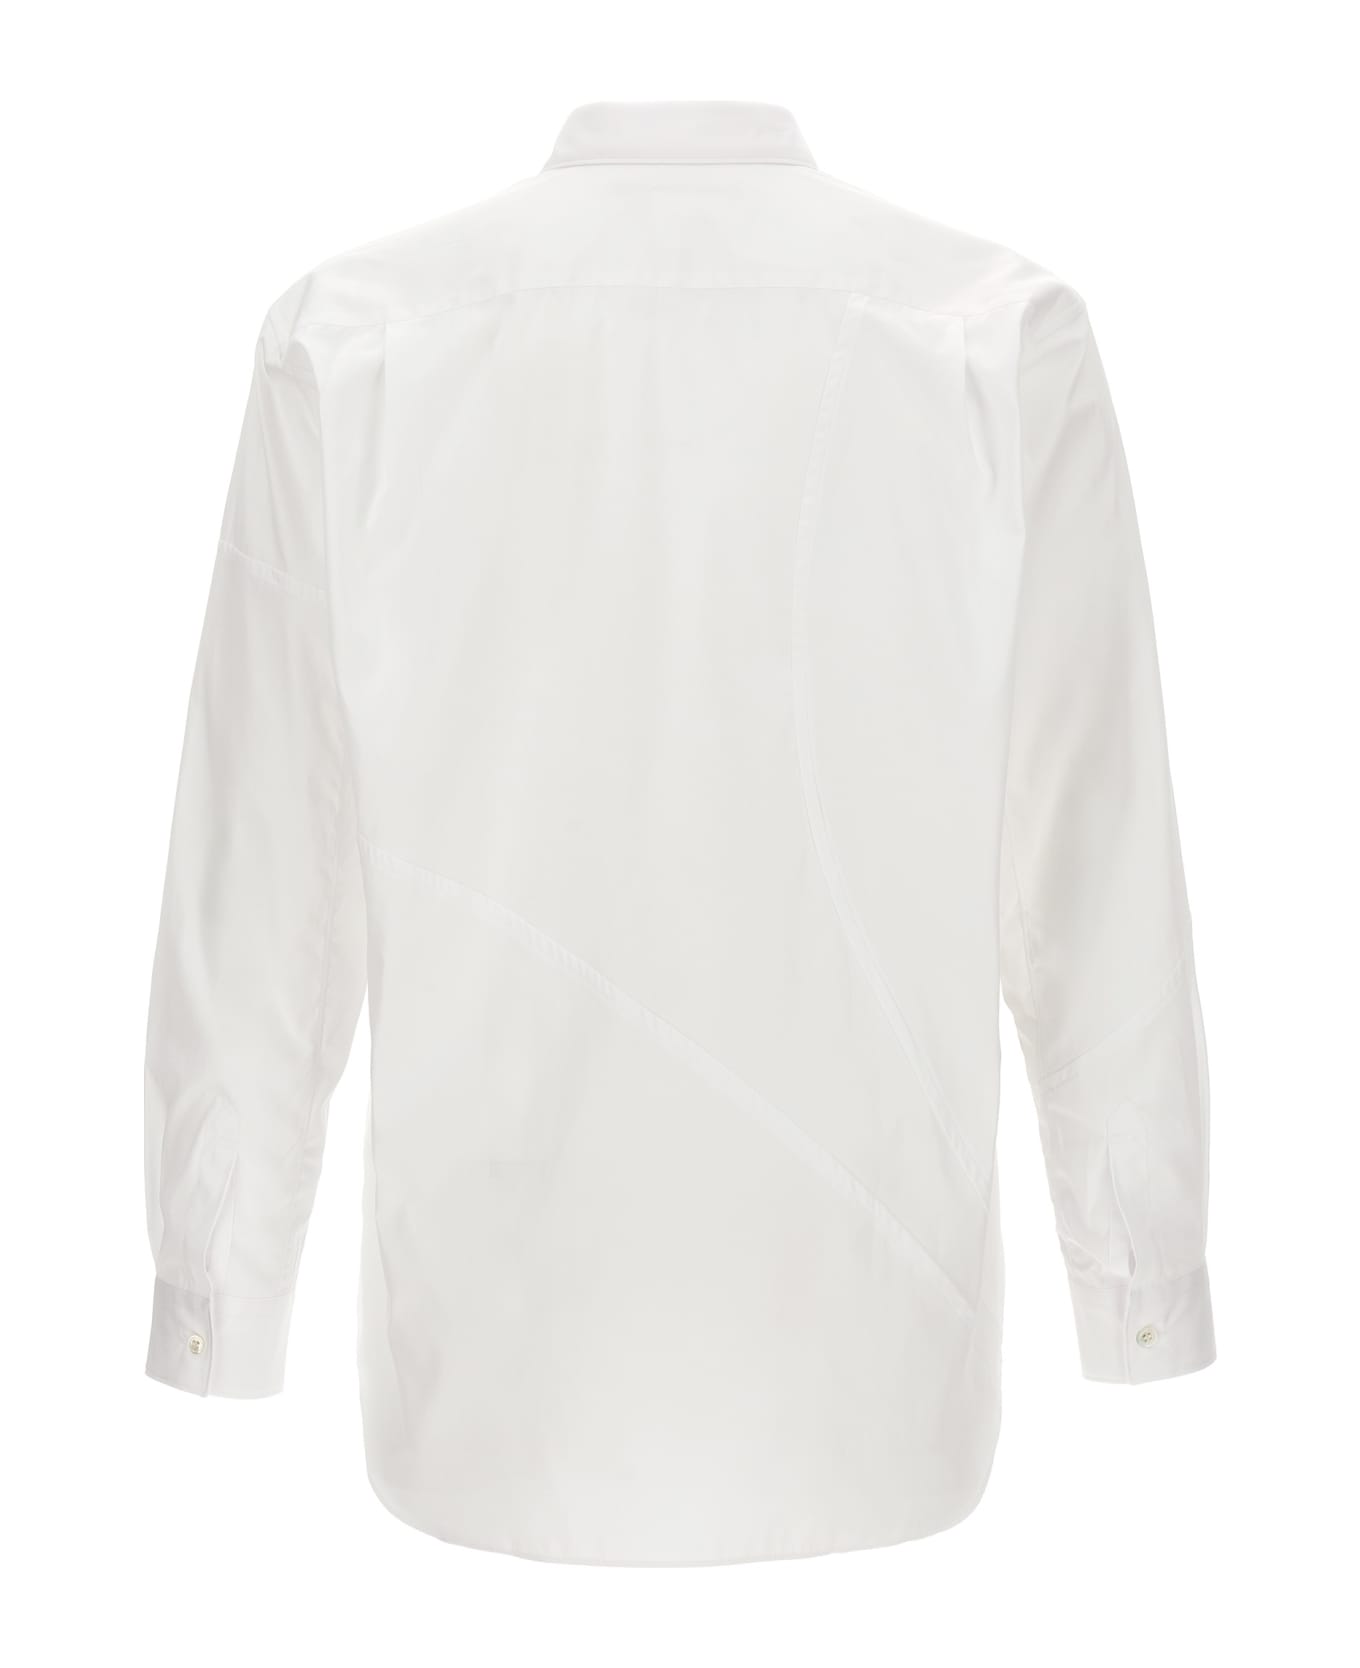 Comme des Garçons Shirt 'andy Warhol' Shirt - White